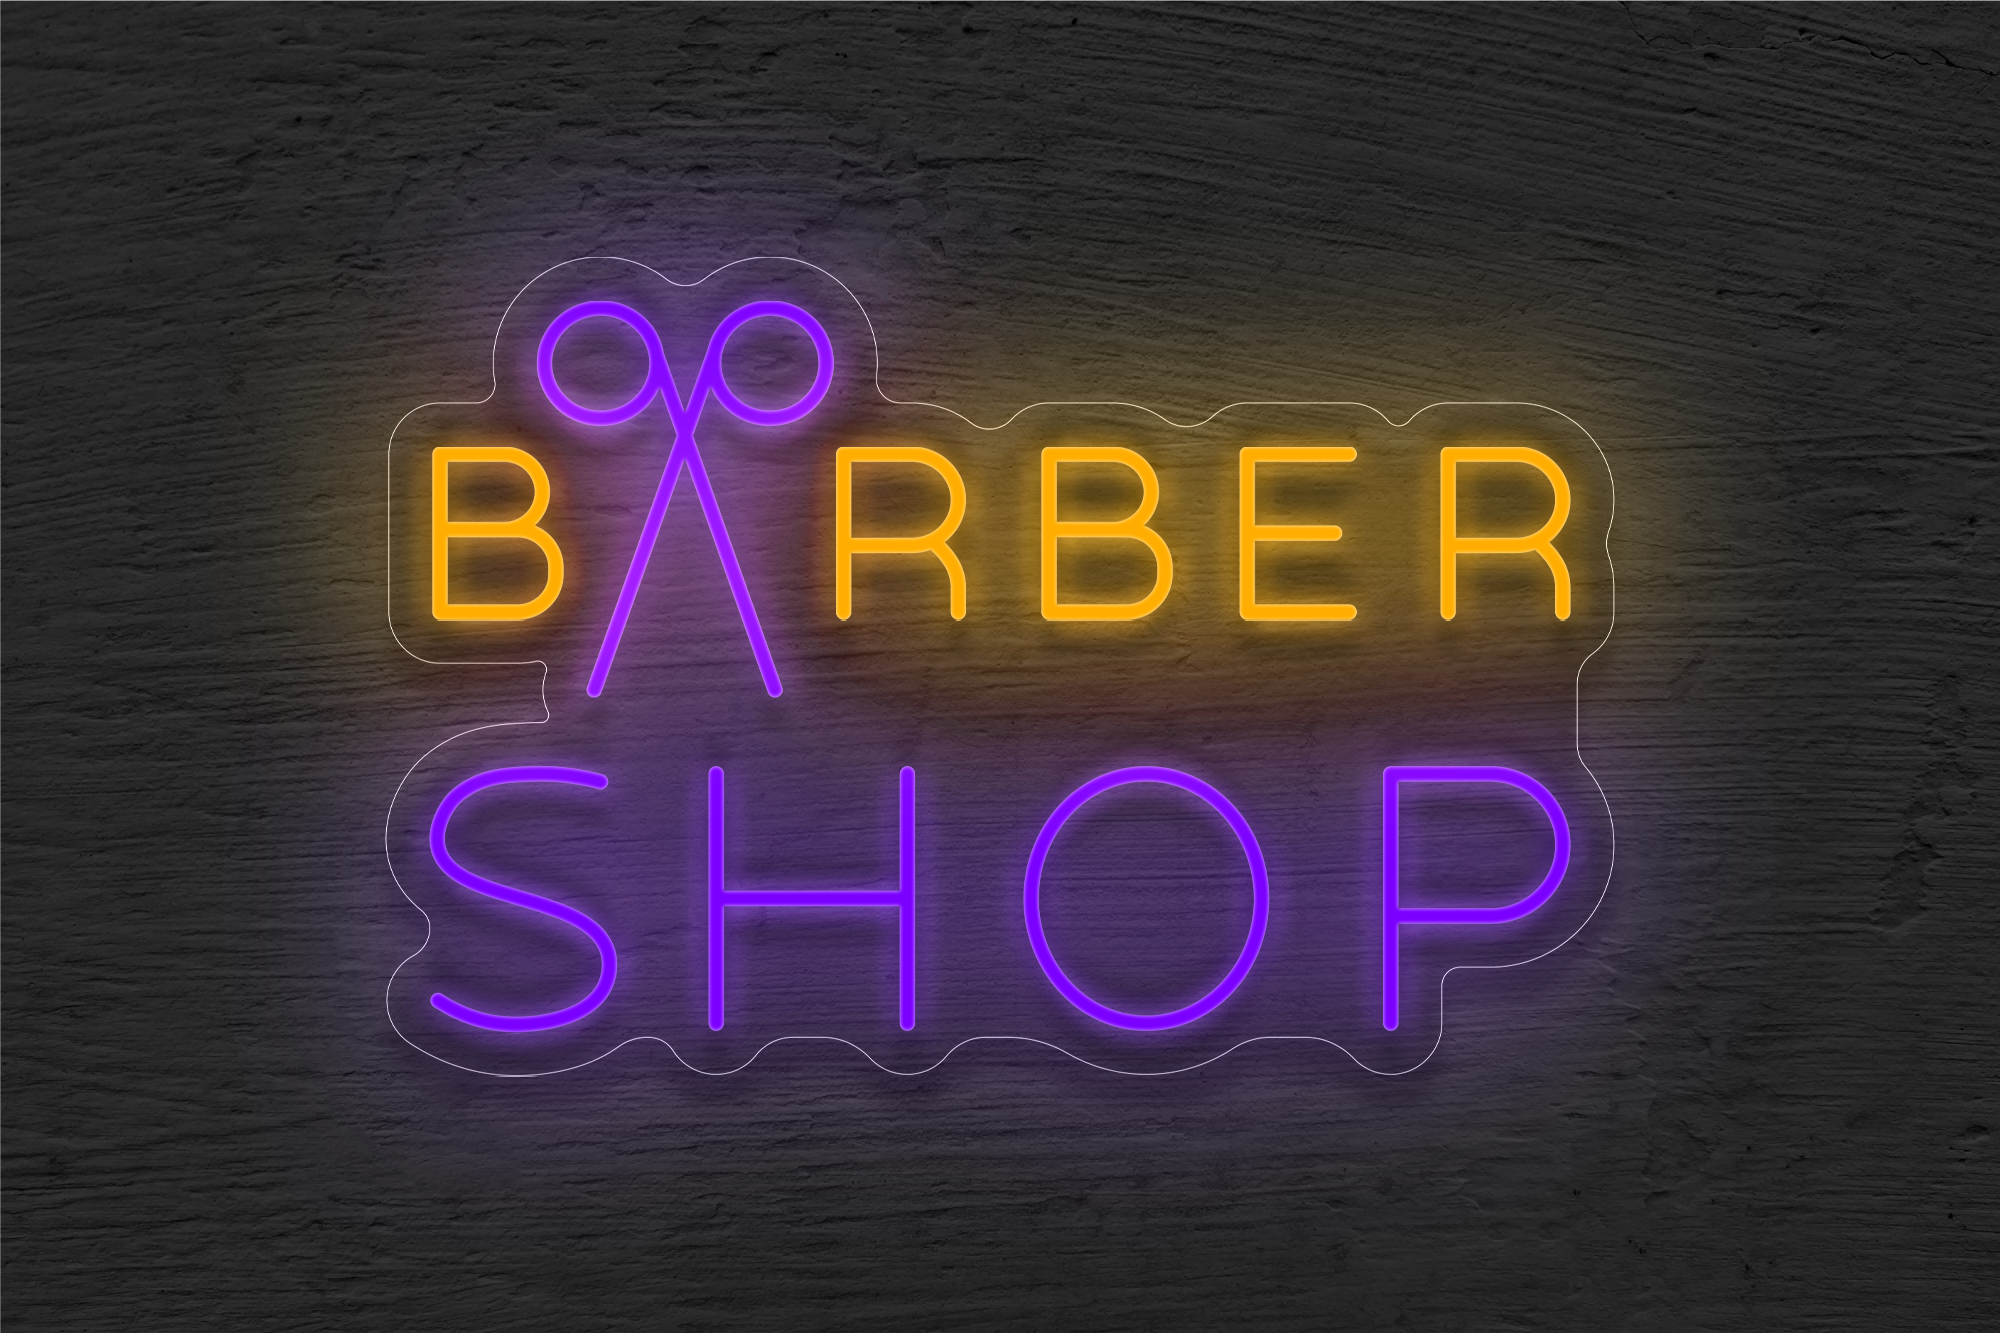 "Barber Shop" with Scissor LED Neon Sign